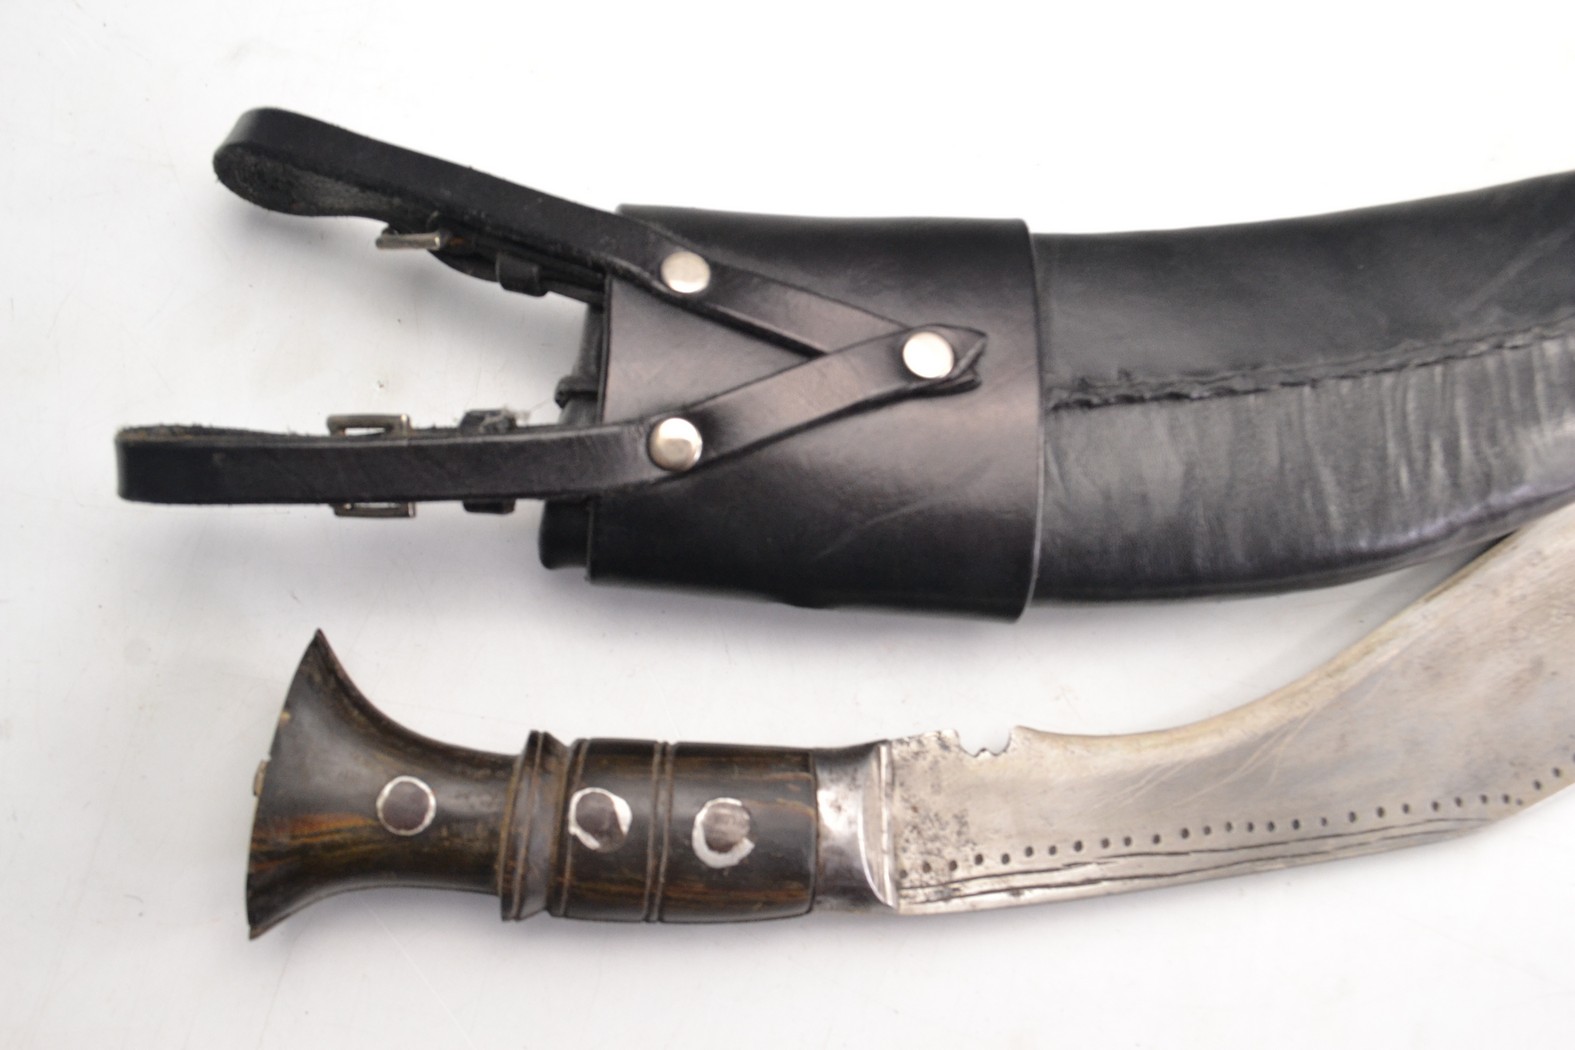 Gurkha Kukri knife with black leather sheath, blade length 30cm approx. - Image 6 of 10